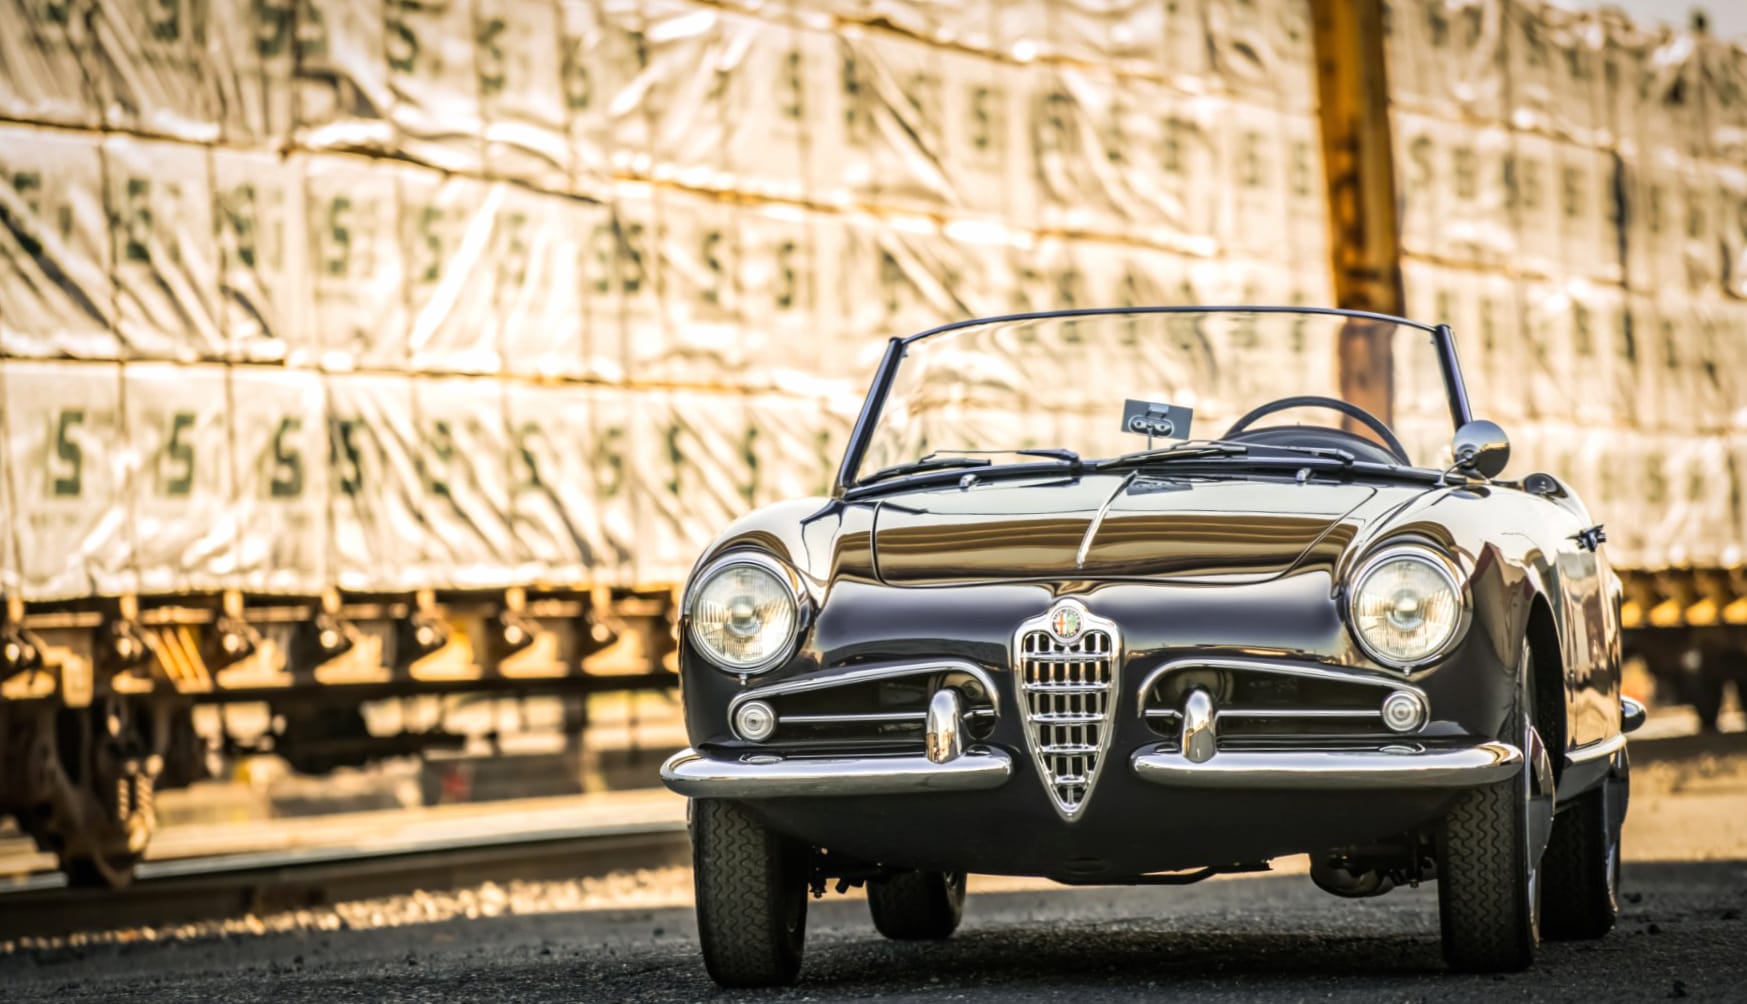 Alfa Romeo Giulietta Spider wallpapers HD quality